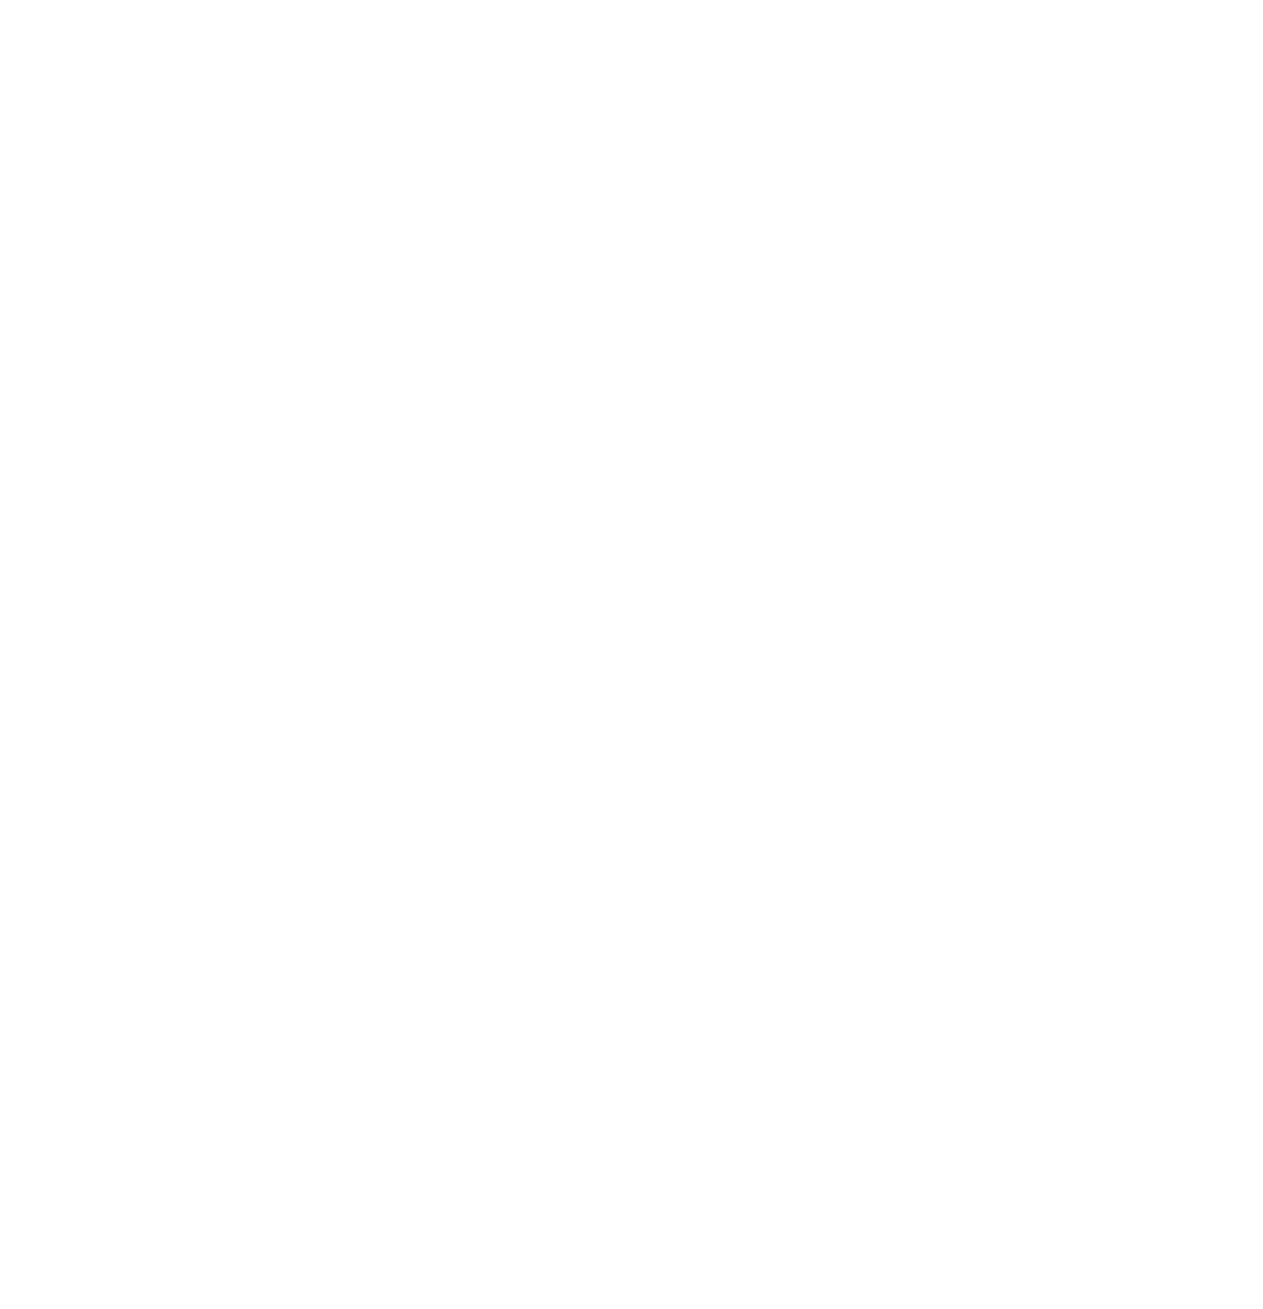 Six Senses Residences The Palm Dubai by Select Group – Residences for Sale on Palm Jumeirah